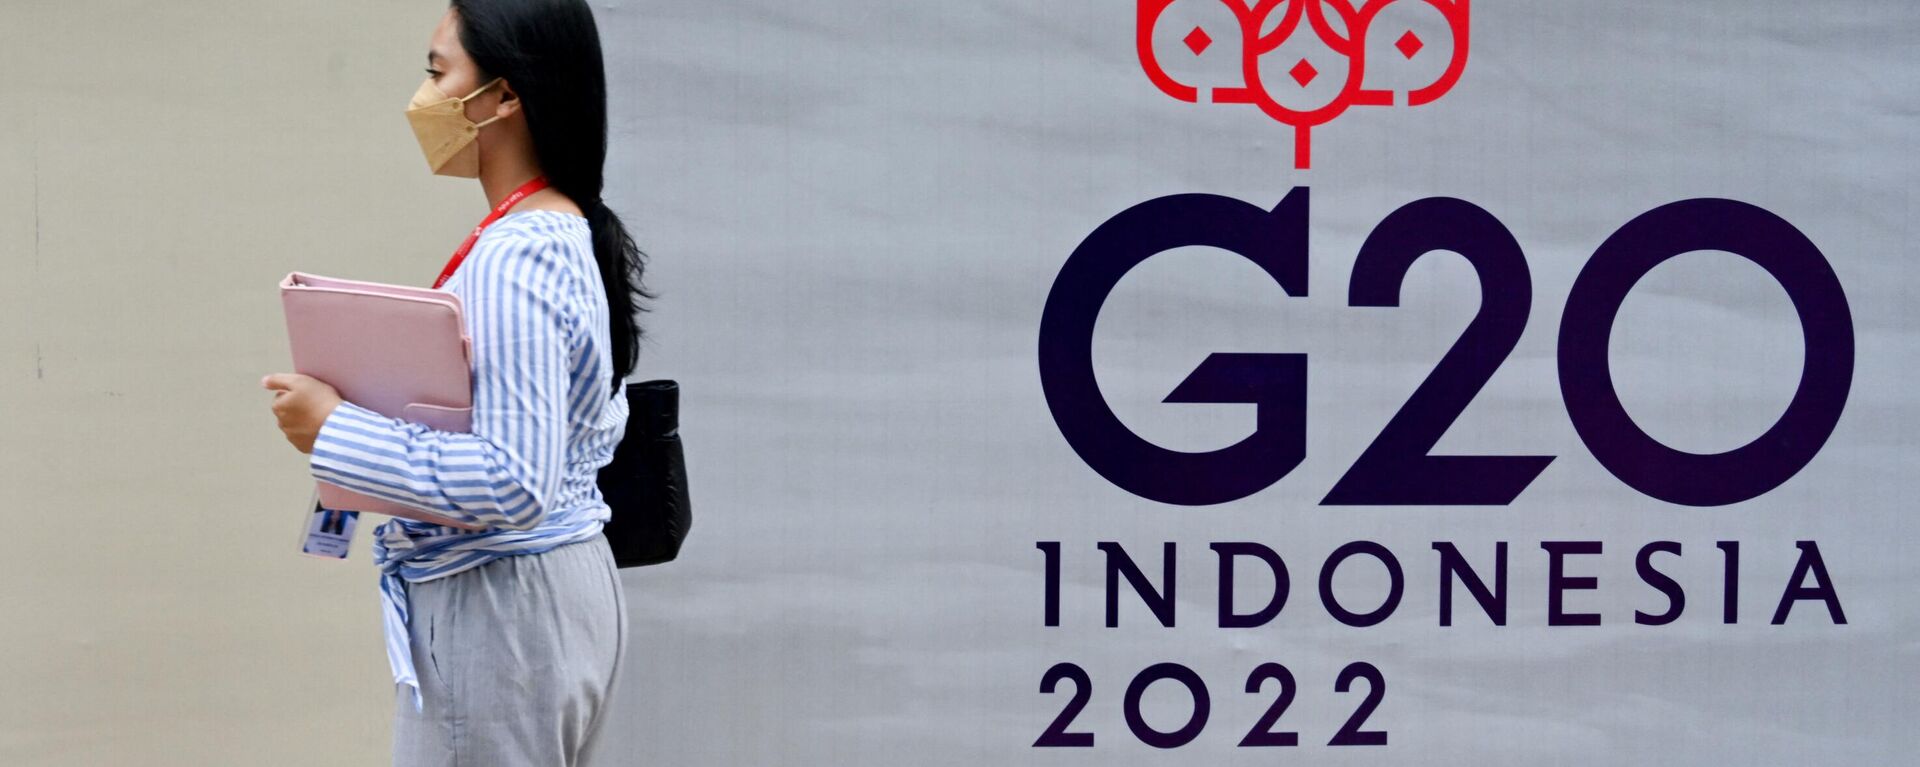 Logo de G20 en Indonesia - Sputnik Mundo, 1920, 12.11.2022